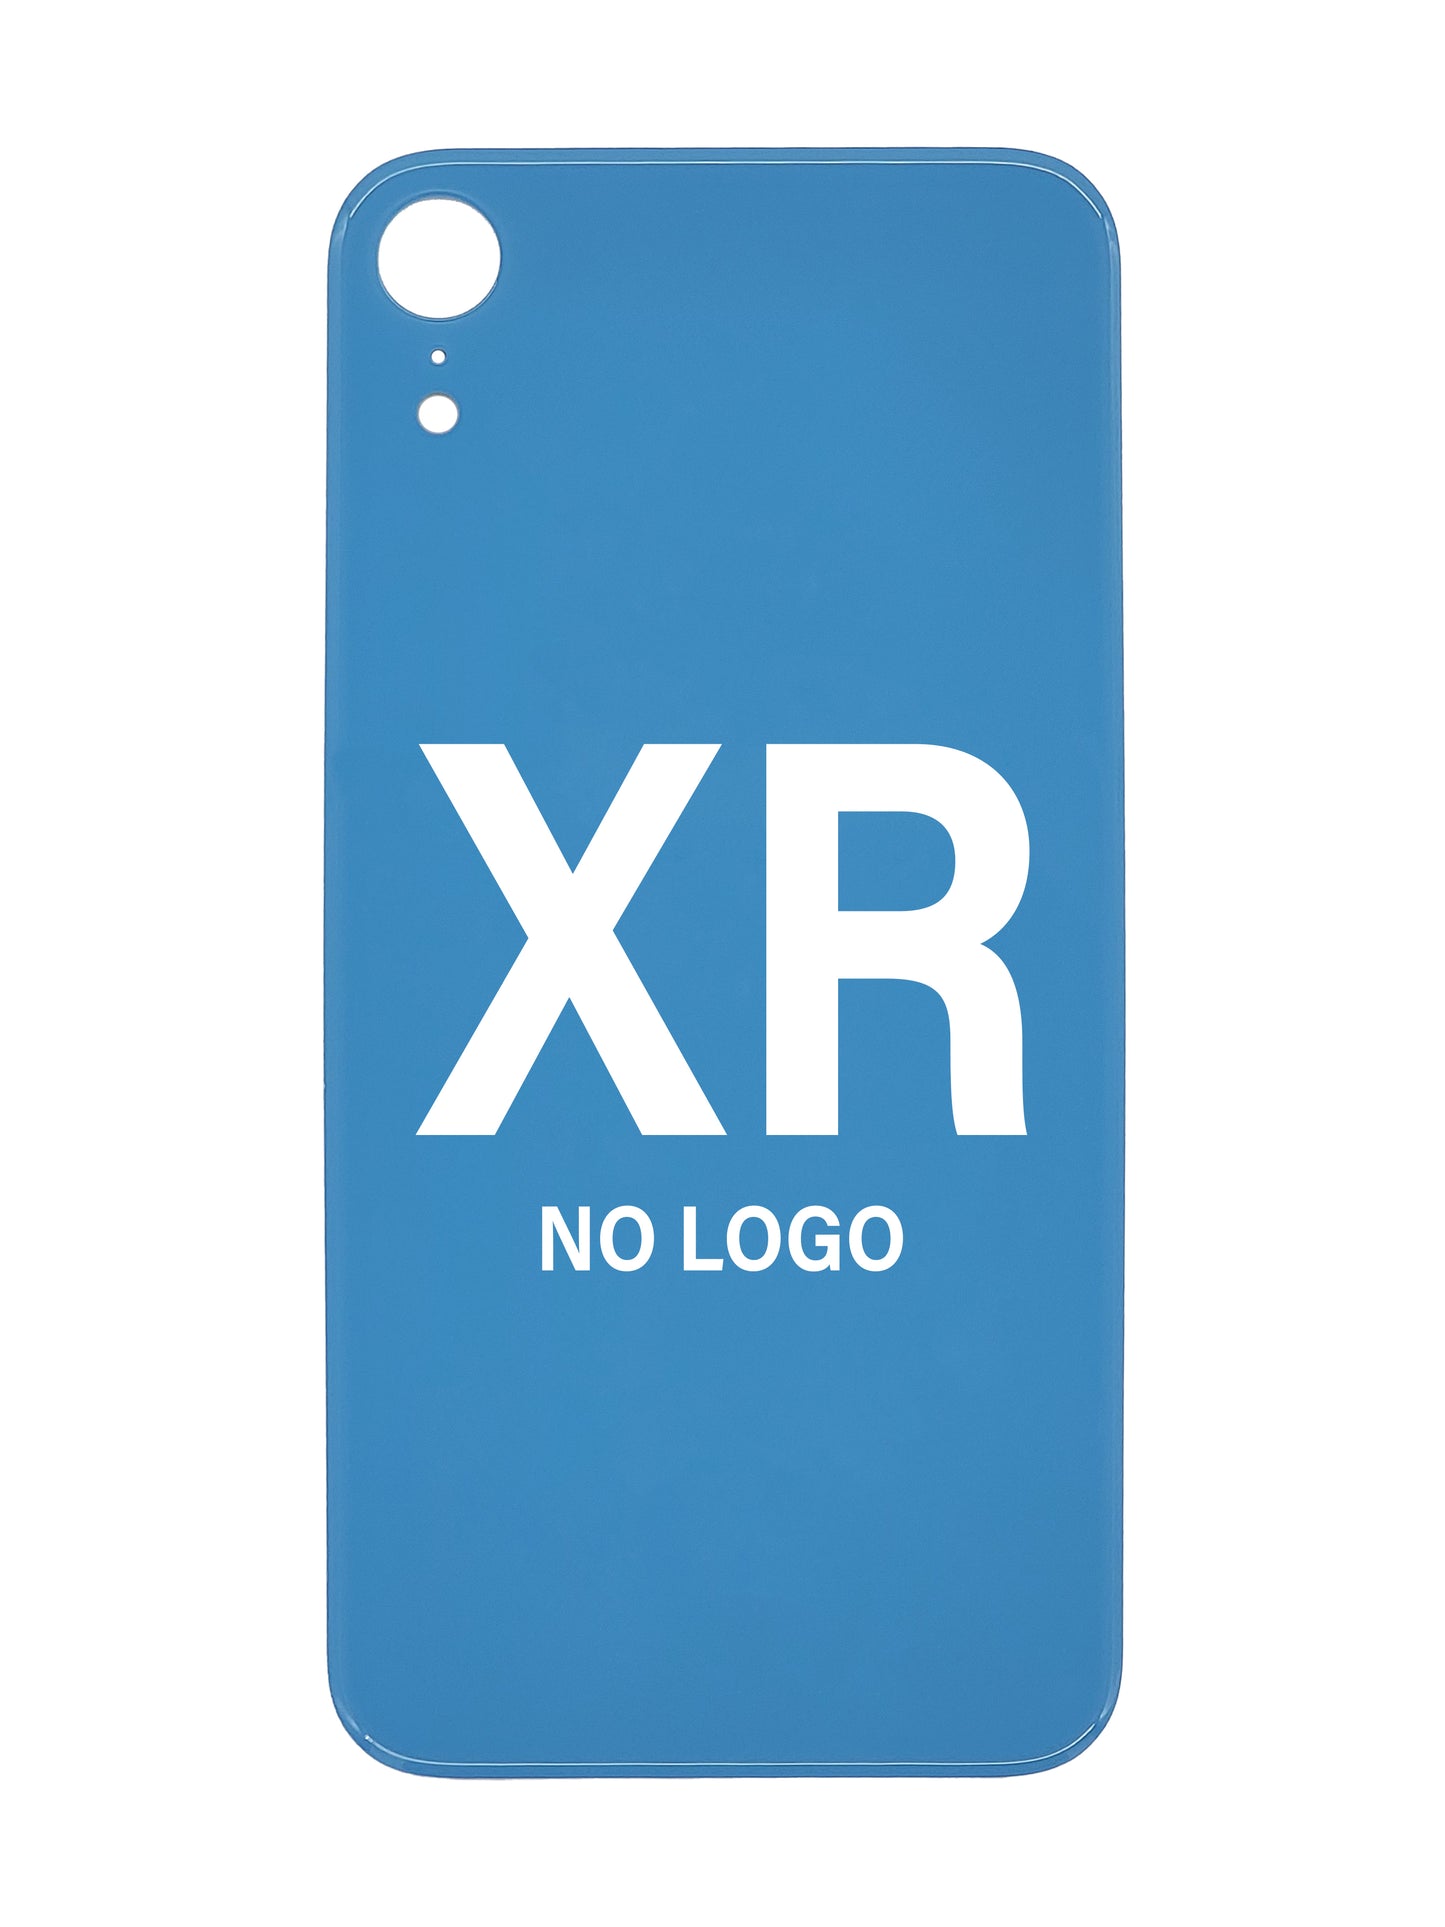 iPhone XR Back Glass (No Logo) (Blue)